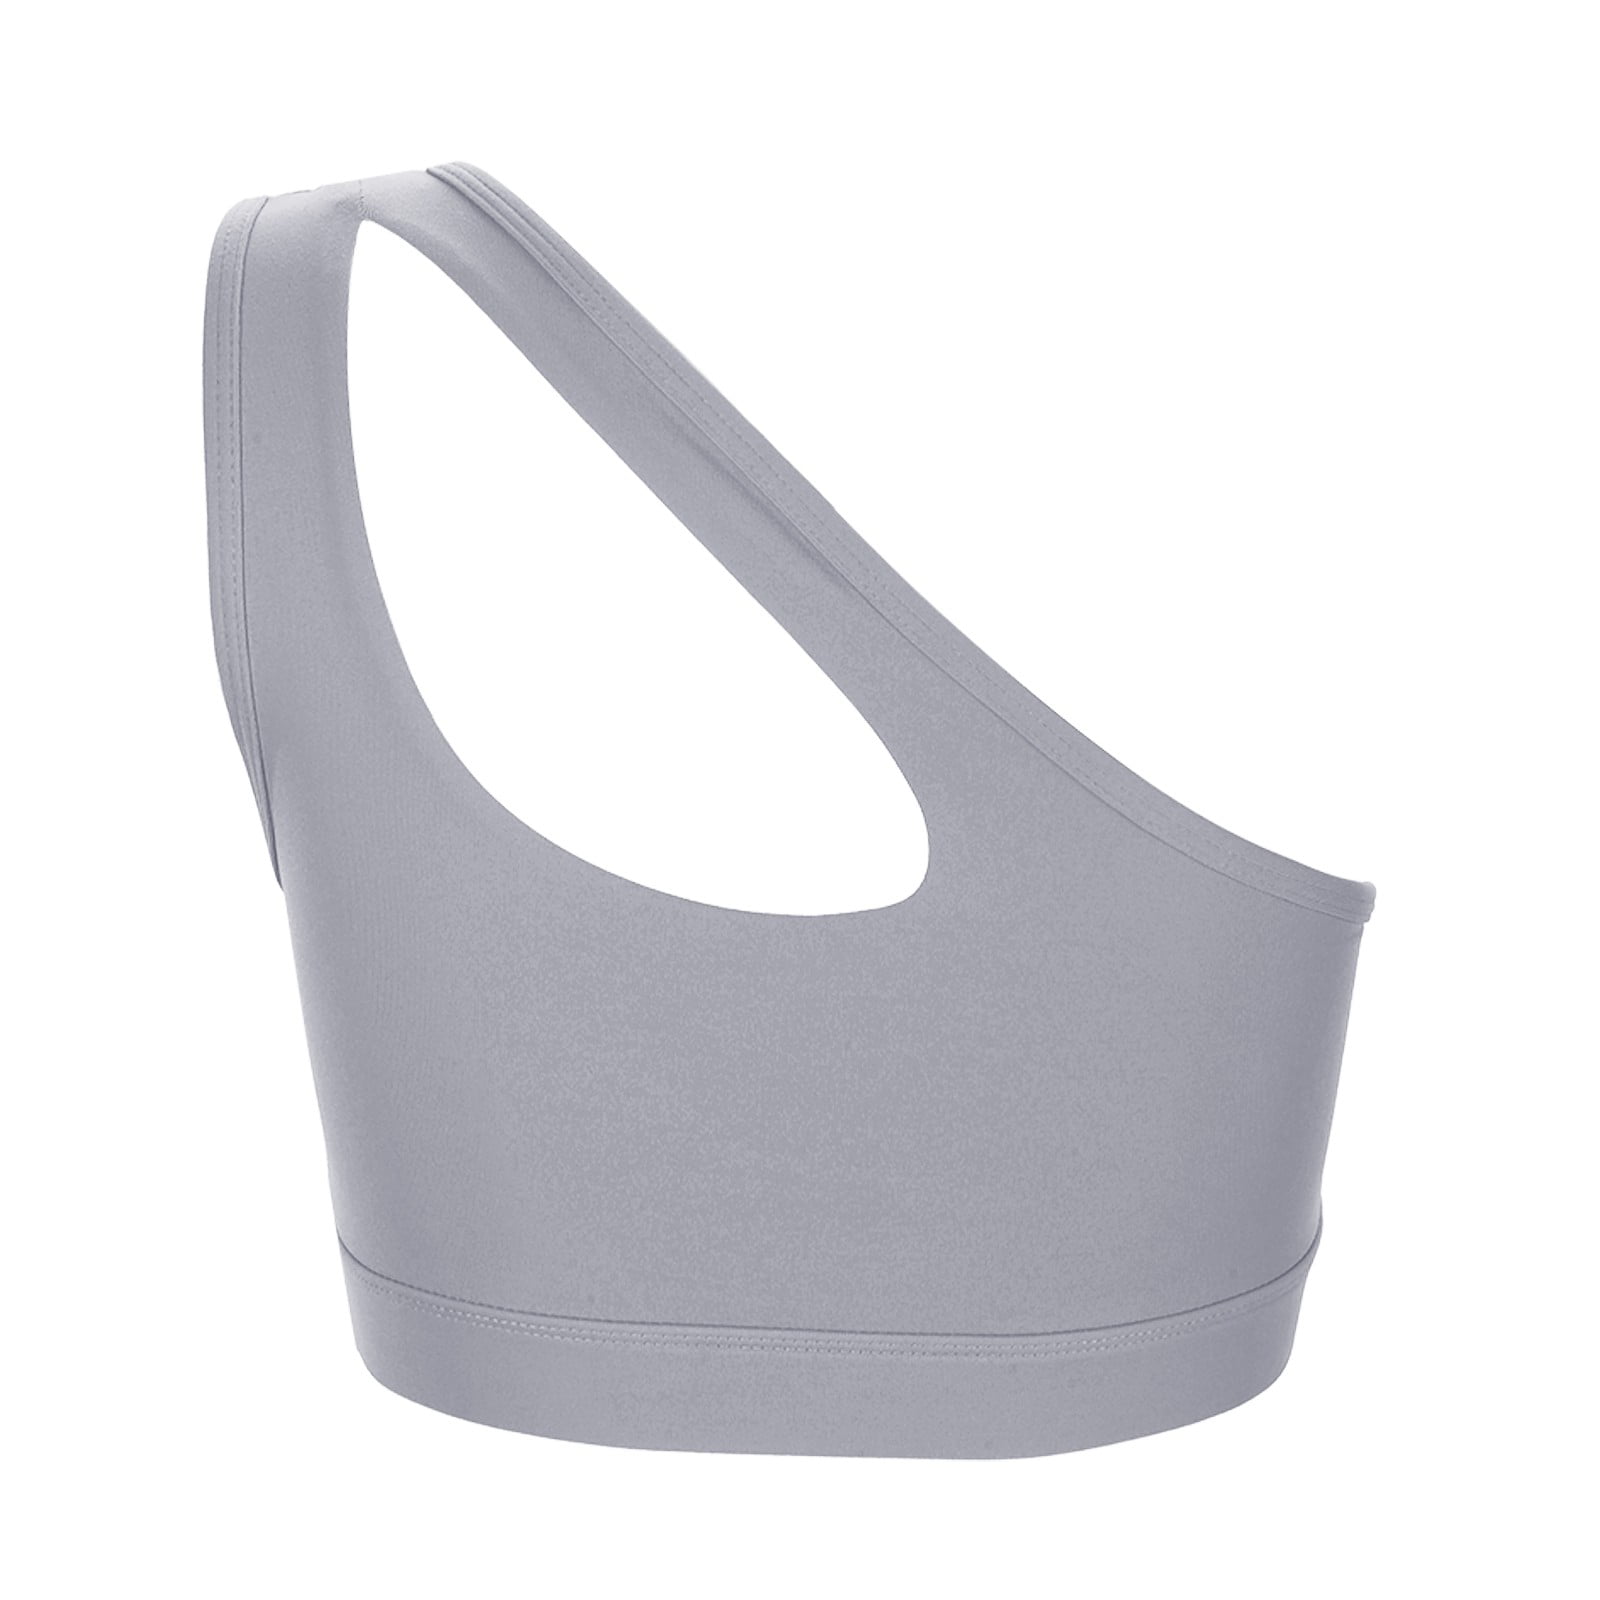 Lisingtool Vest for Women Women's Sports Underwear One Shoulder